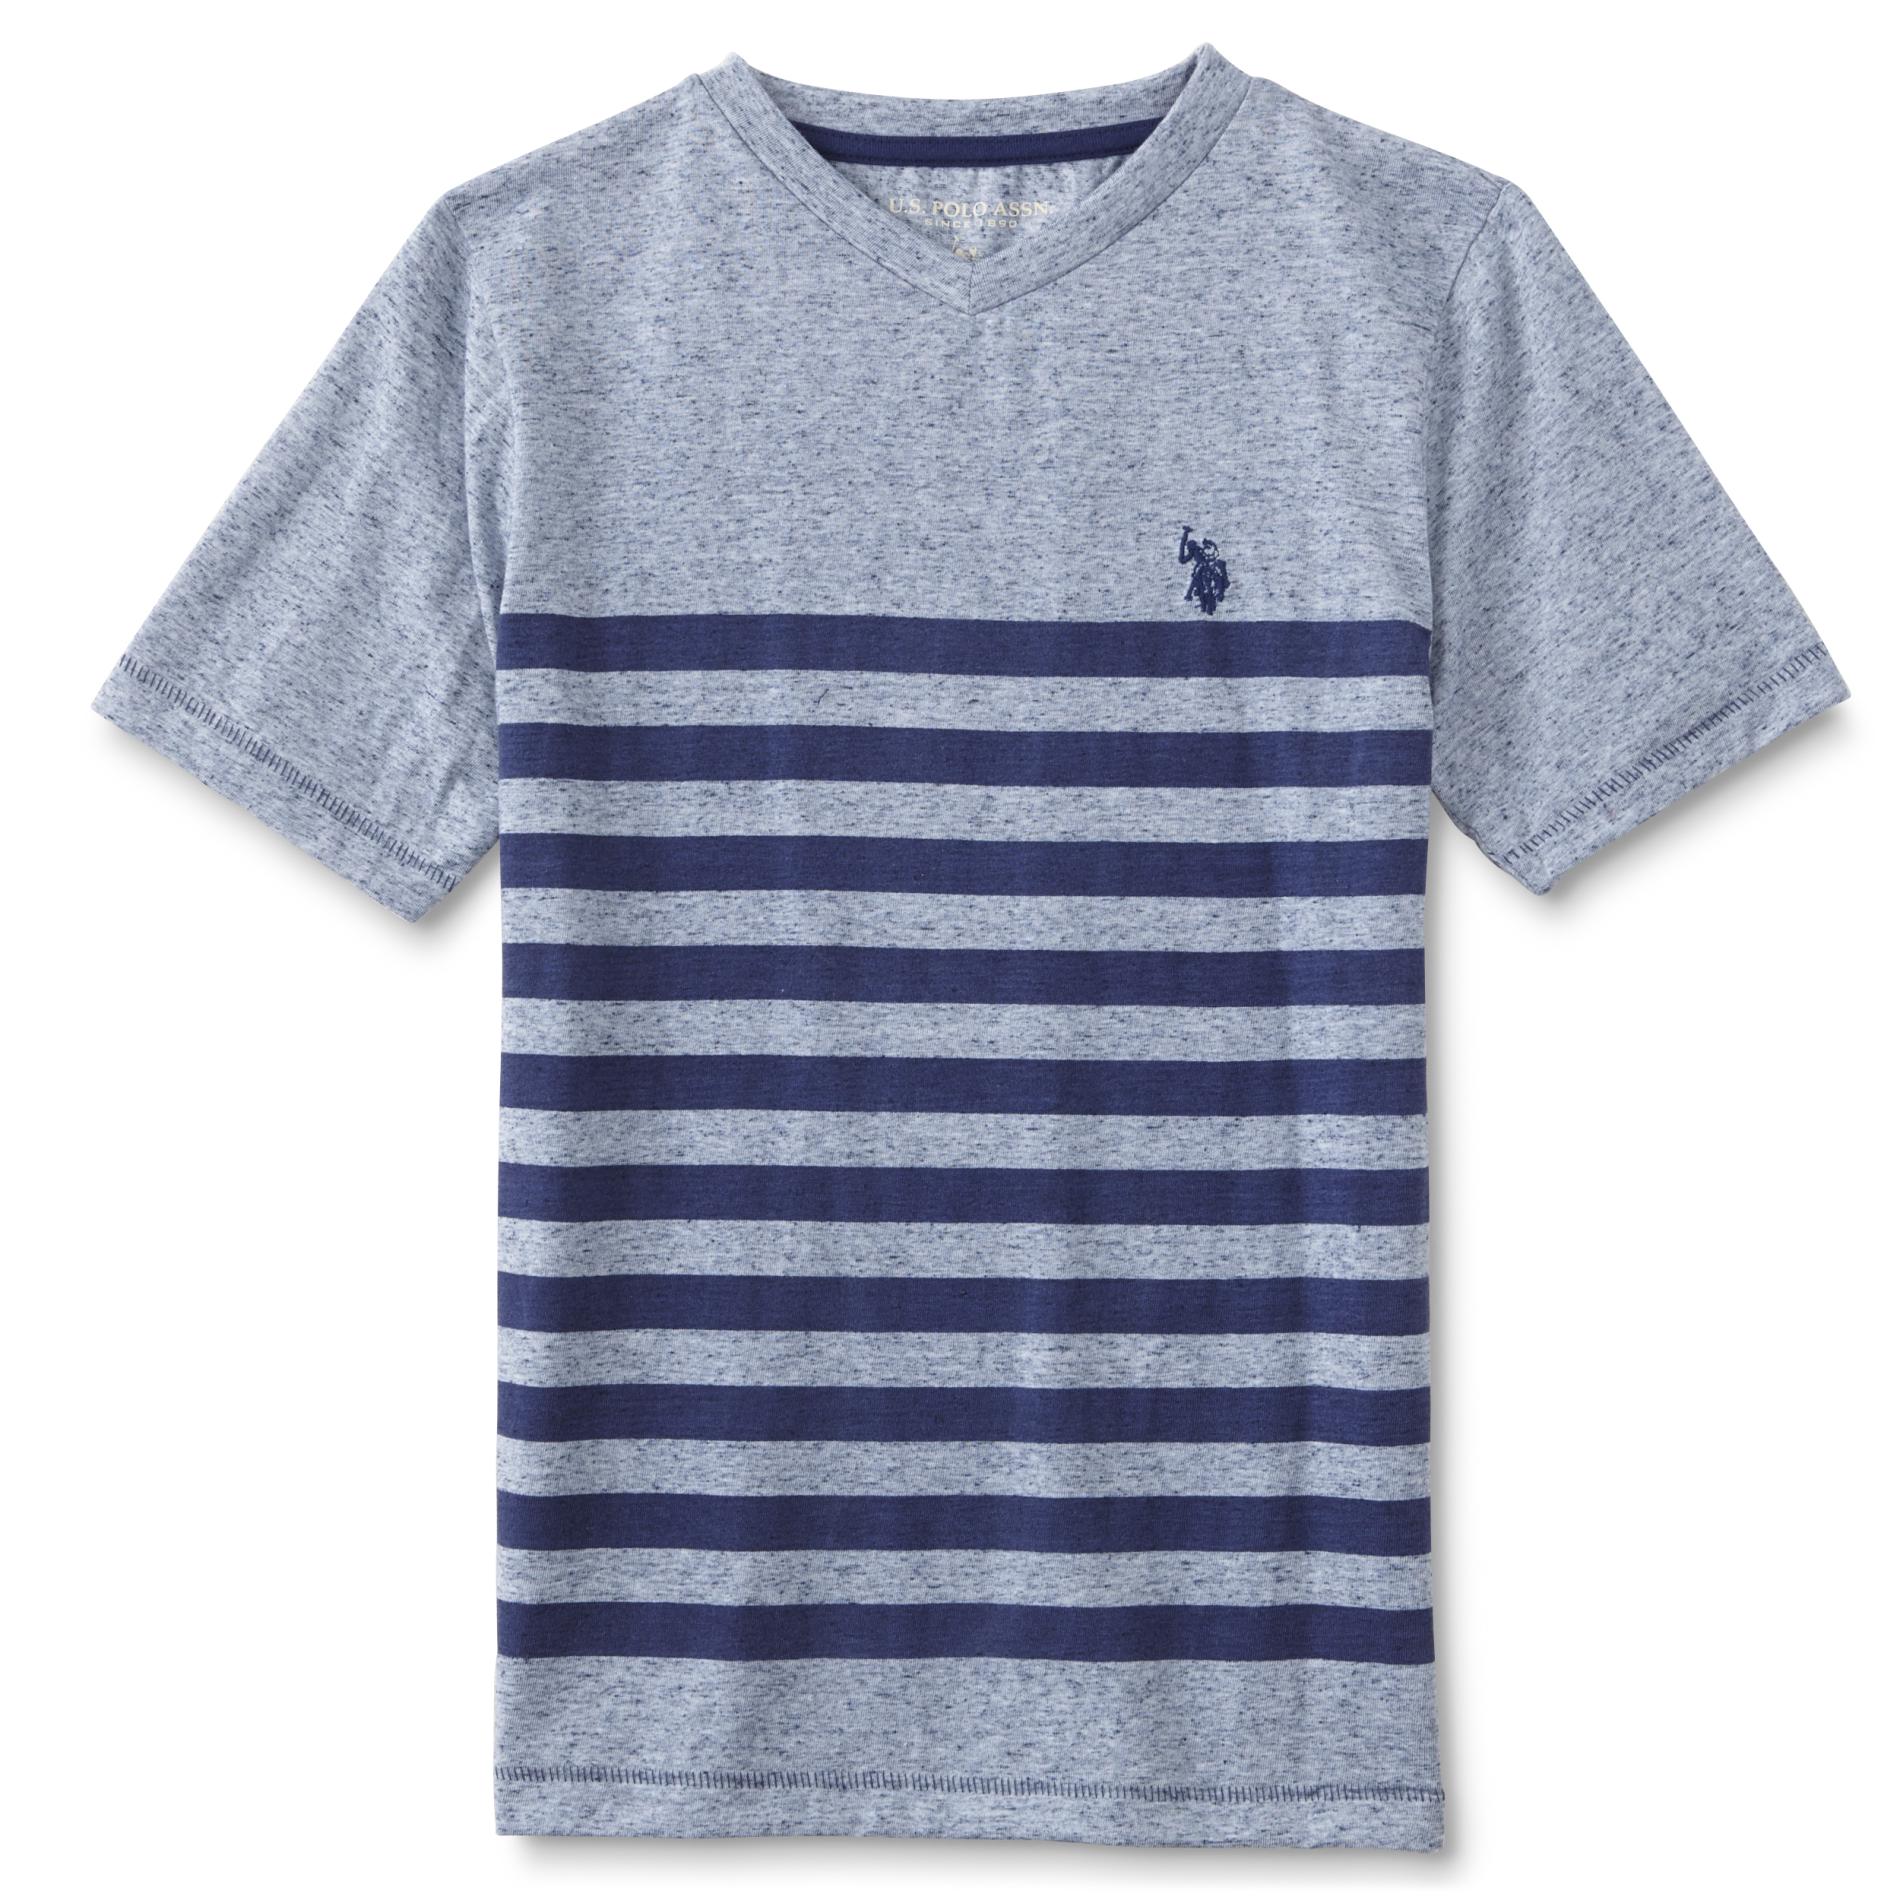 U.S. Polo Assn. Boy's T-Shirt - Striped